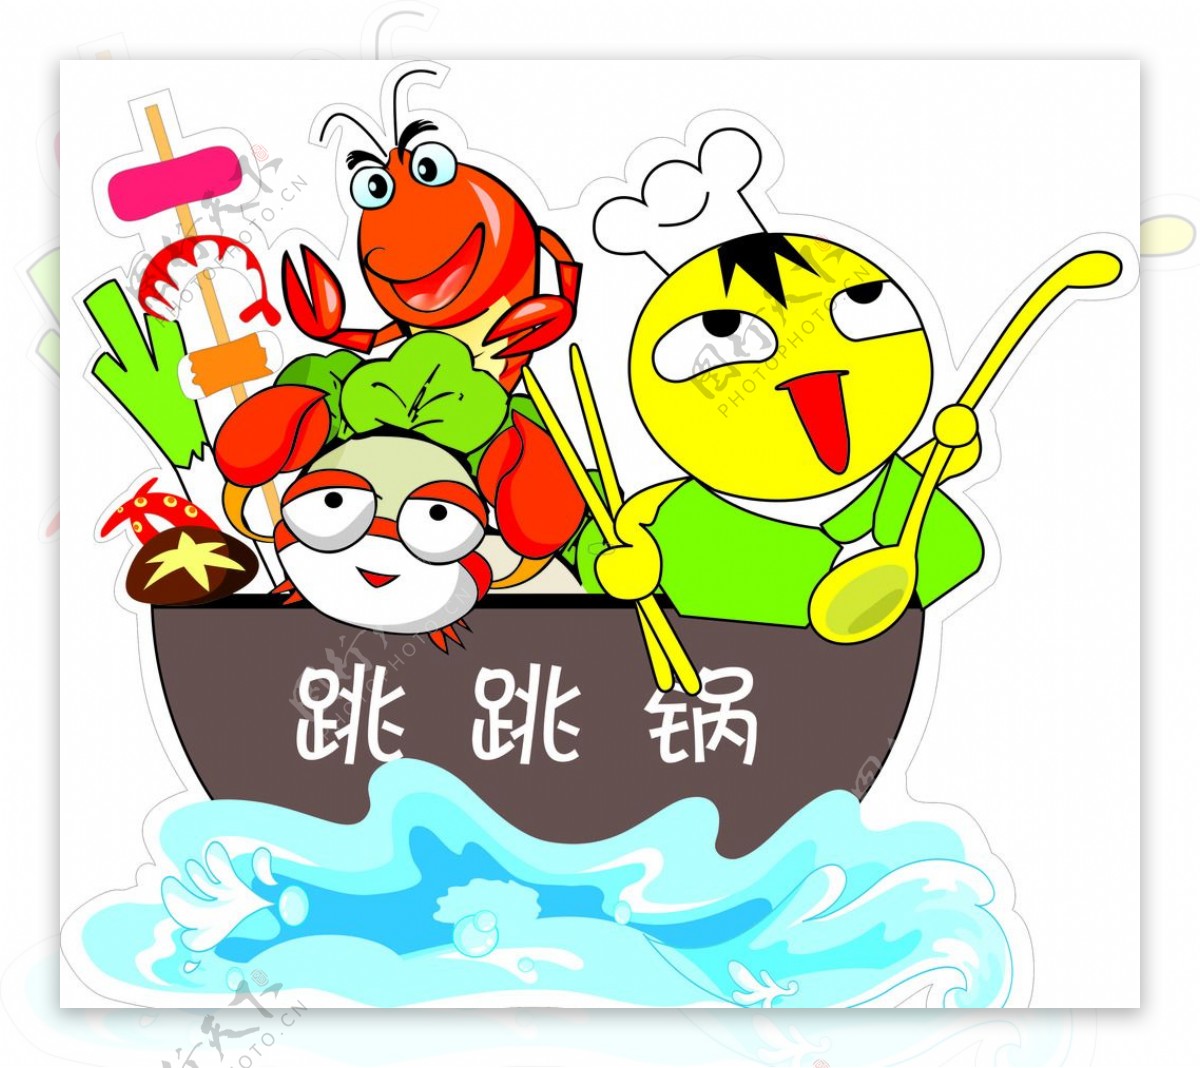 海鲜火锅logo